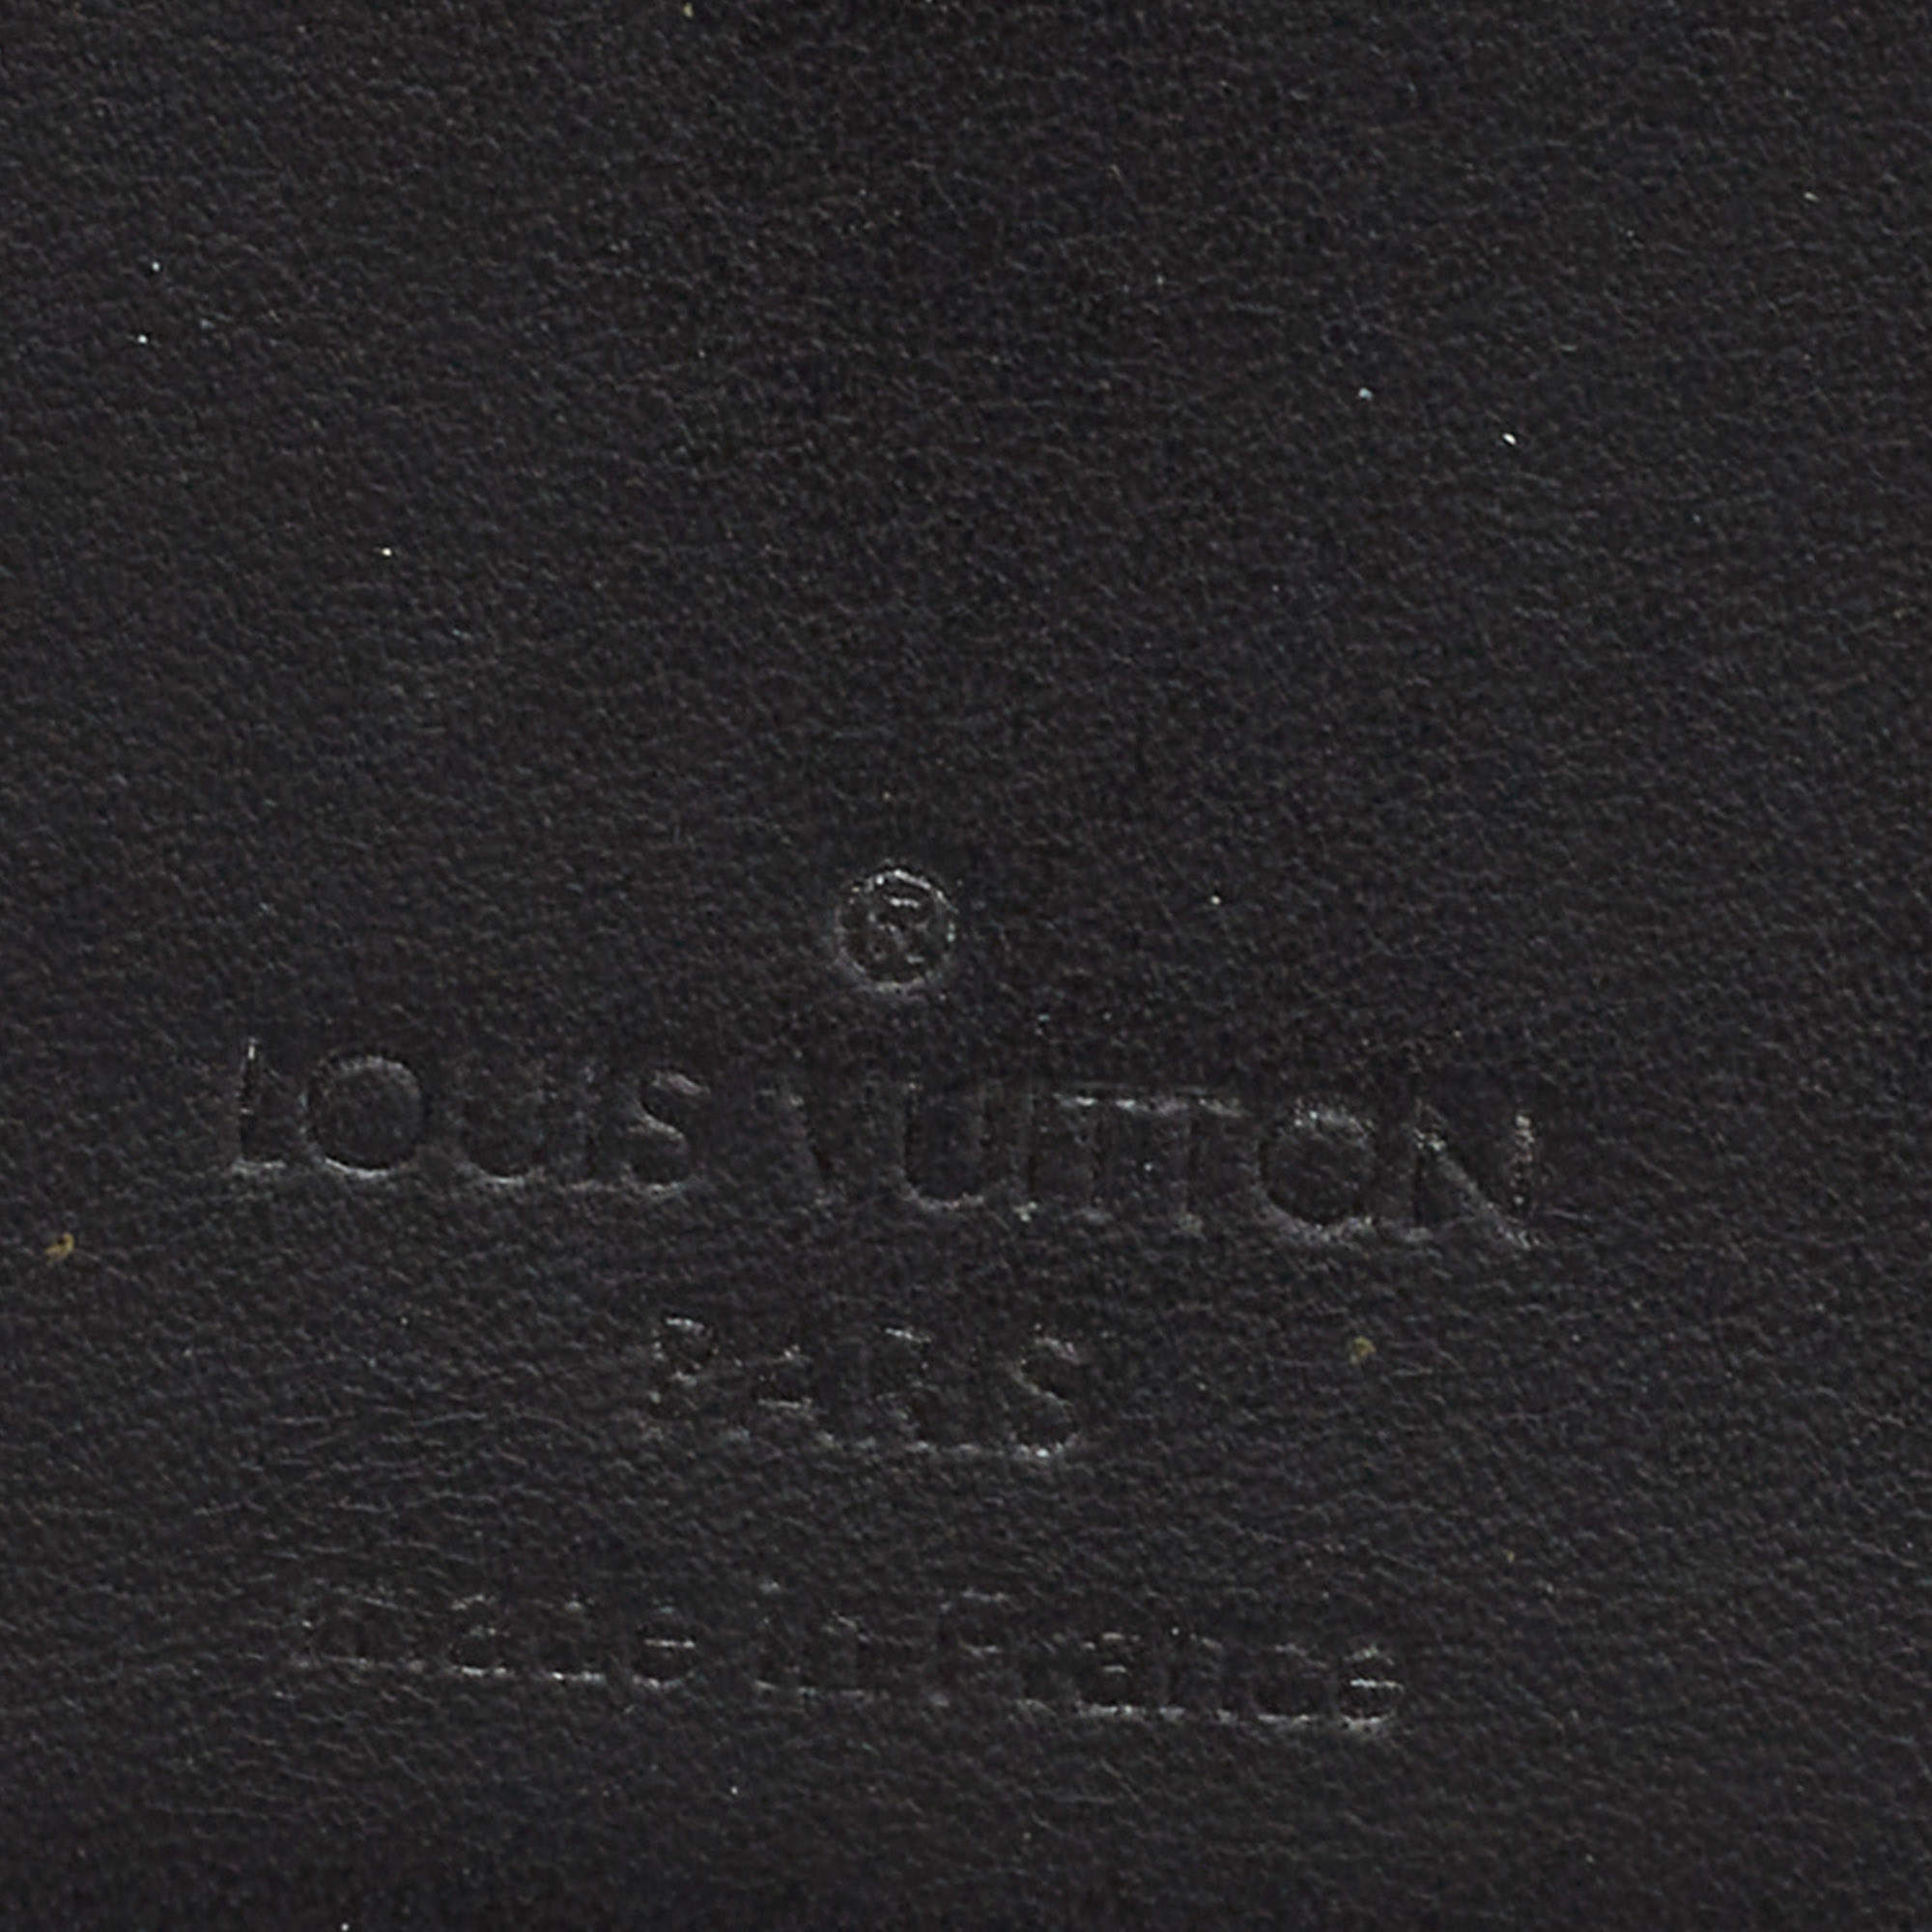 Louis Vuitton Pocket Organizer Monogram Shadow Black - Original São Paulo